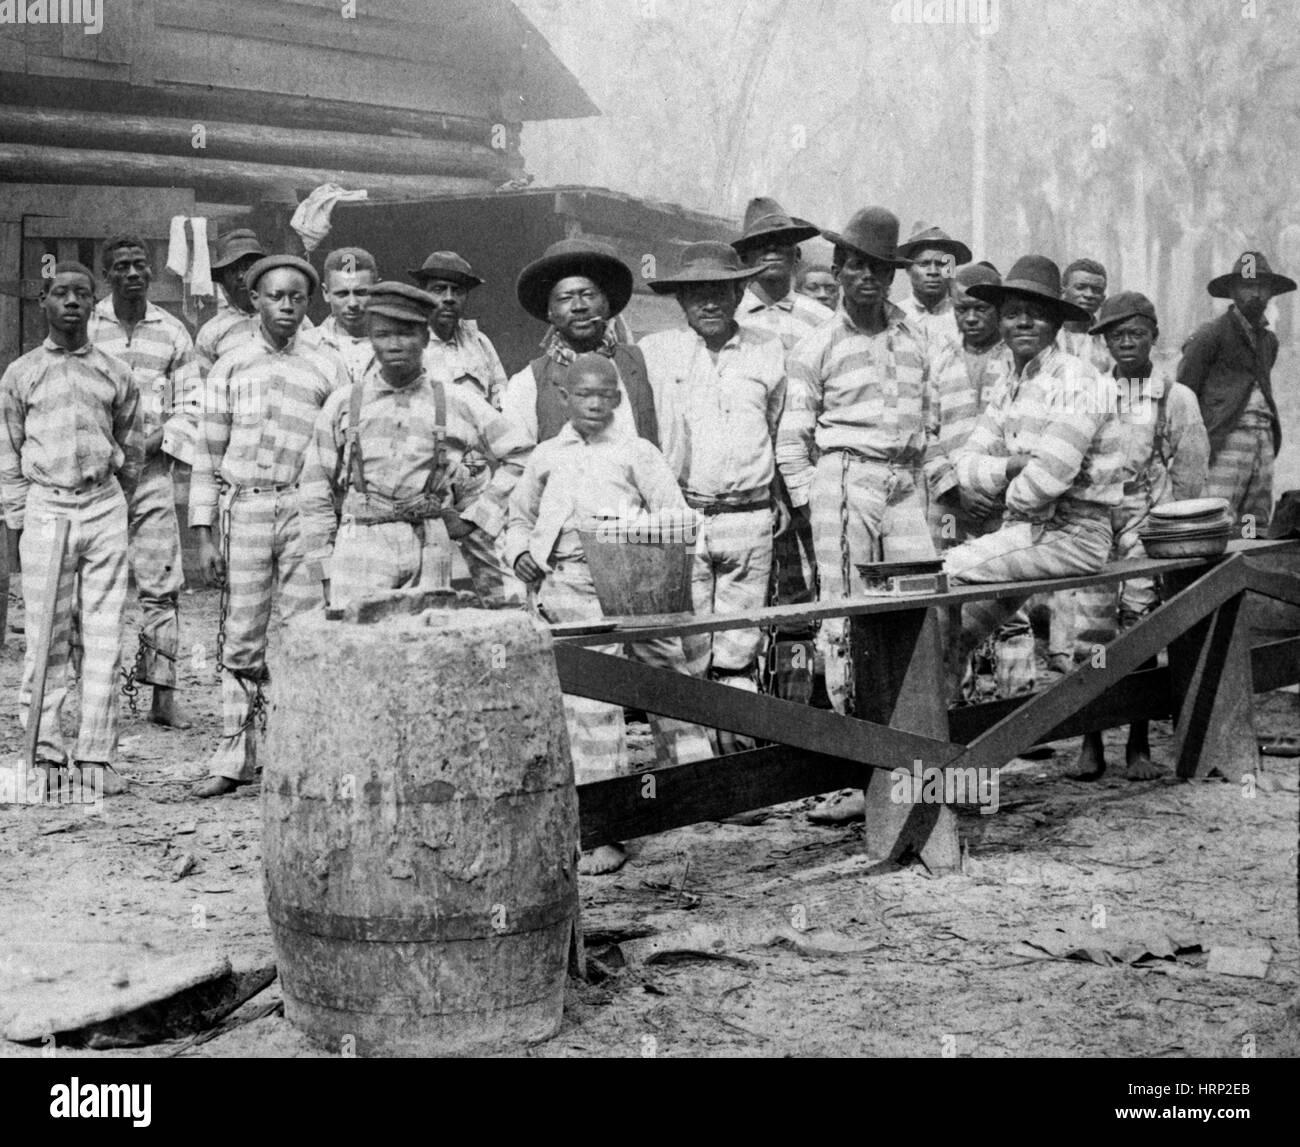 Chain Gang, 1898 Stock Photo - Alamy